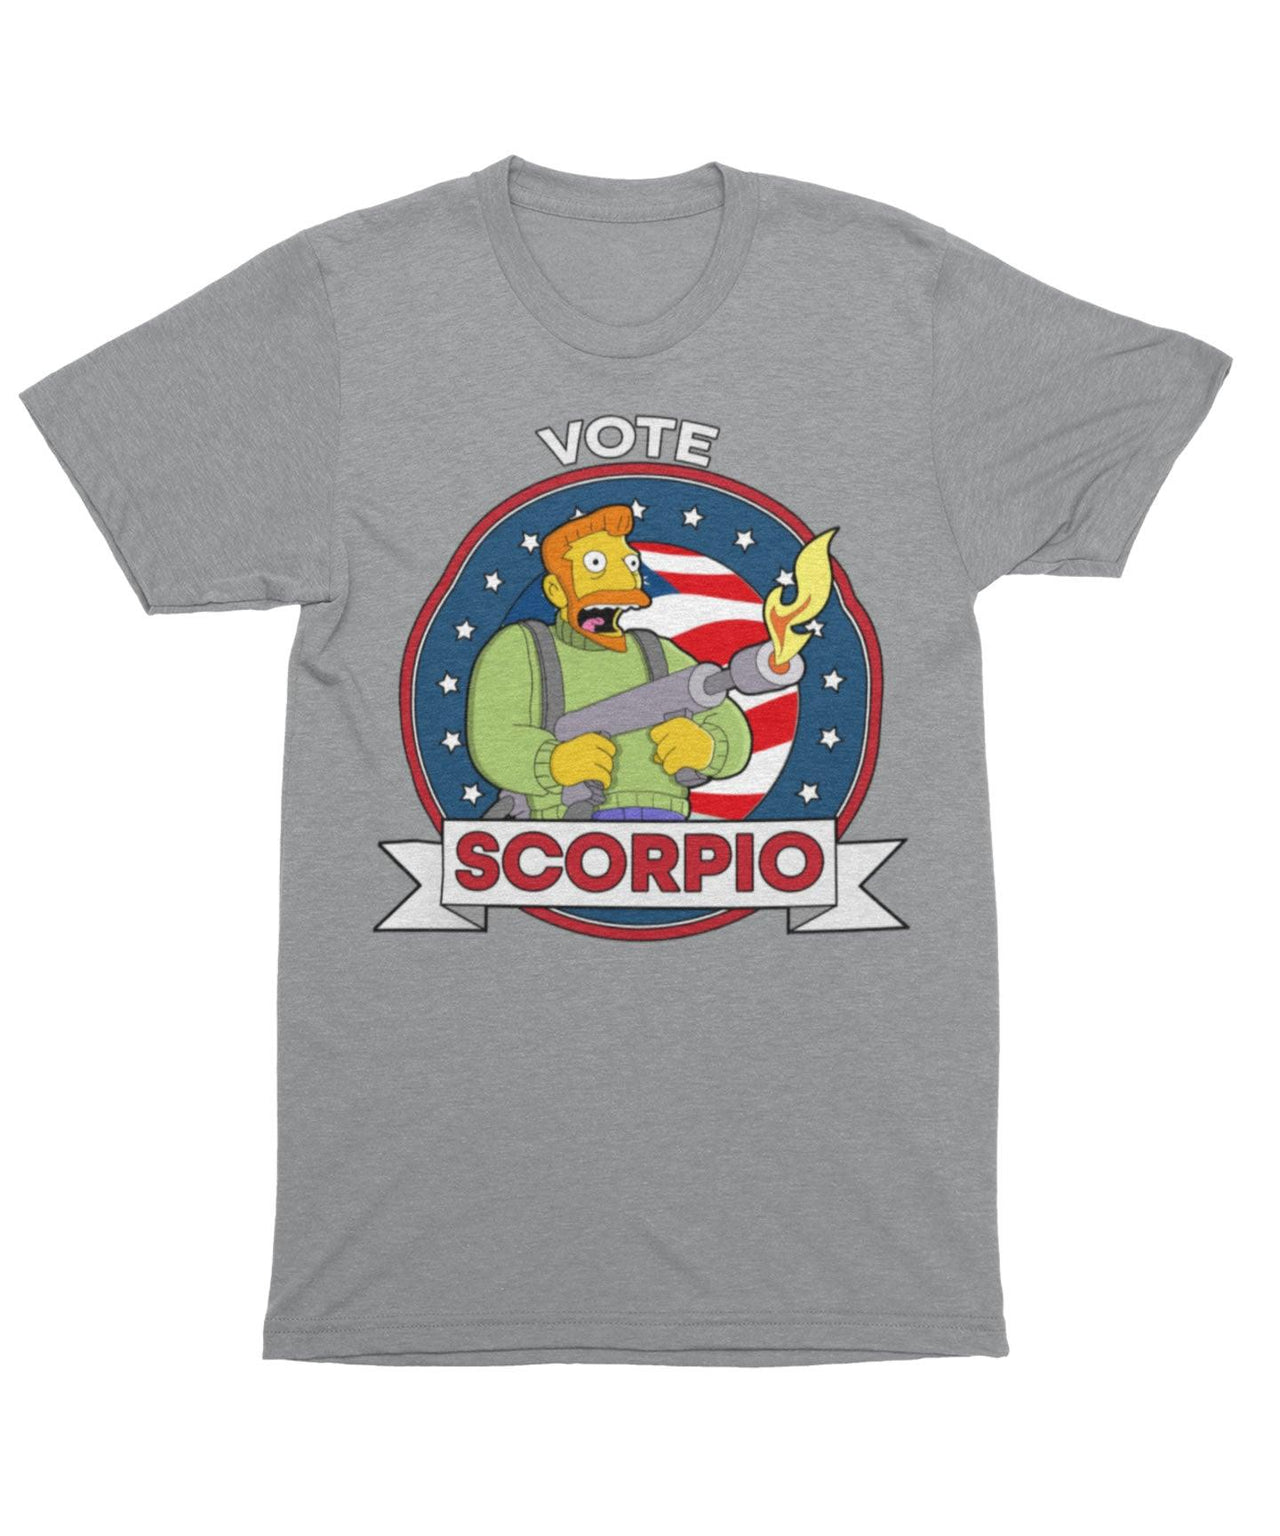 Top Notchy Vote Scorpio Men's/Unisex Graphic T-Shirt For Men 8Ball